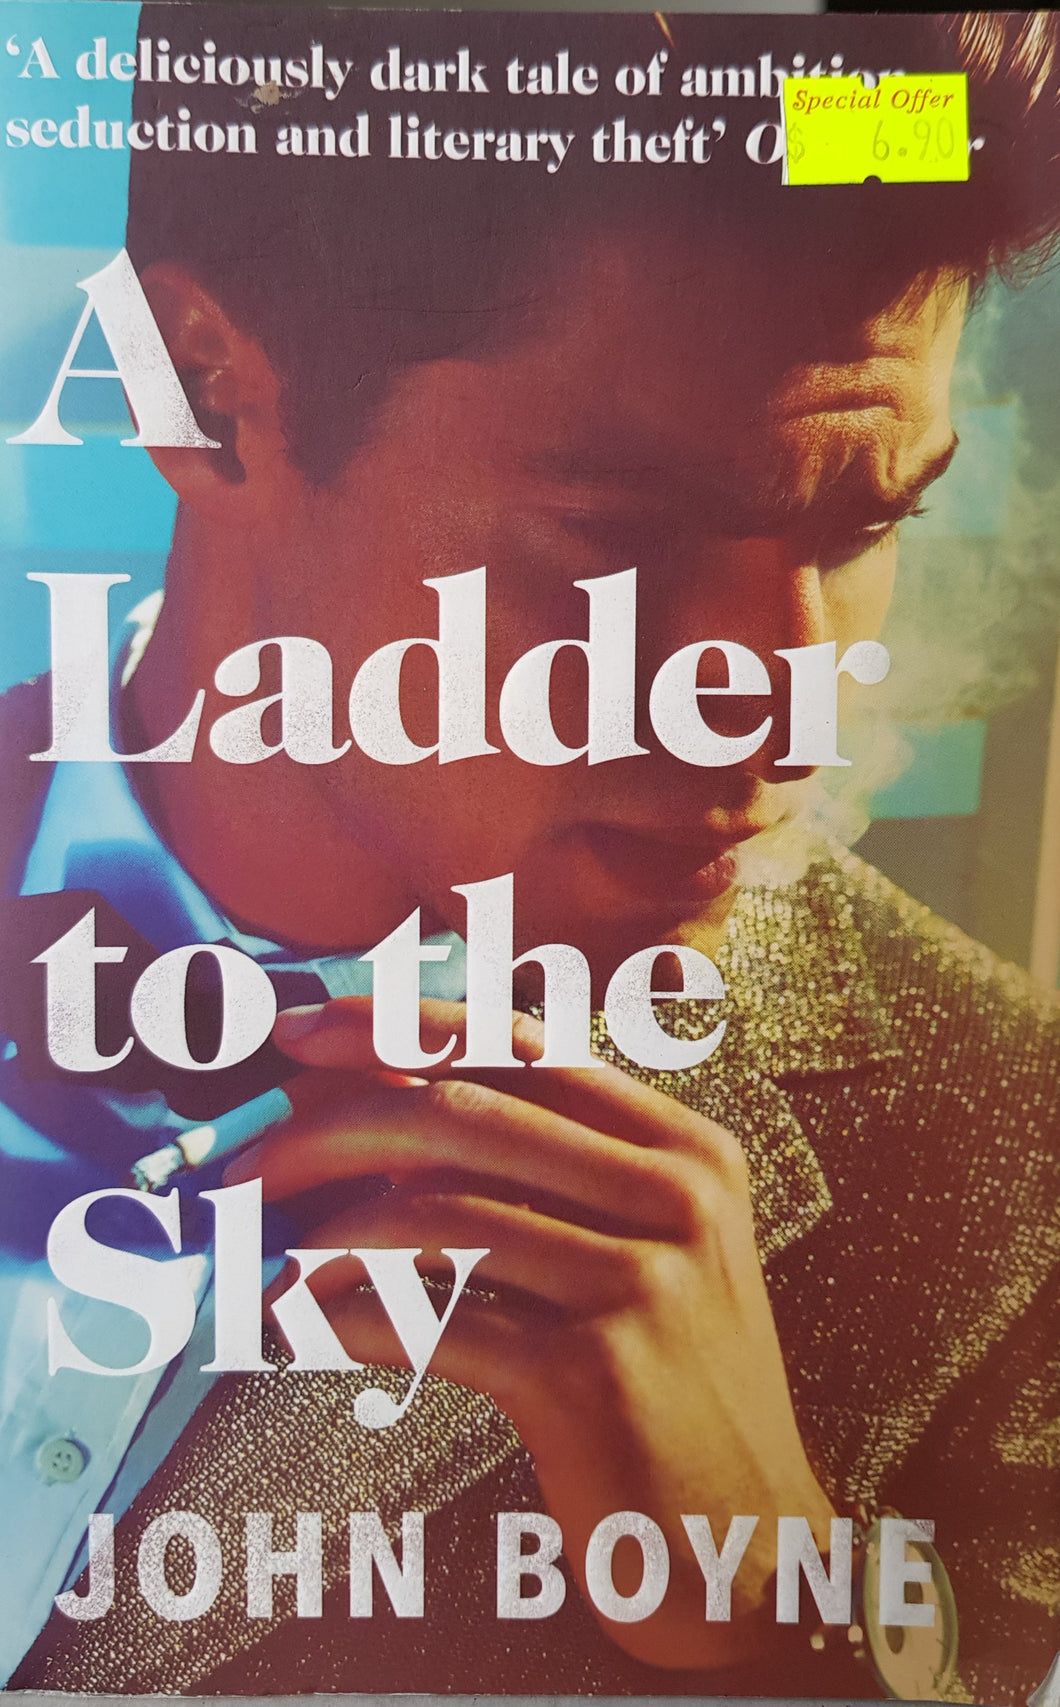 A Ladder to the Sky - John Boyne